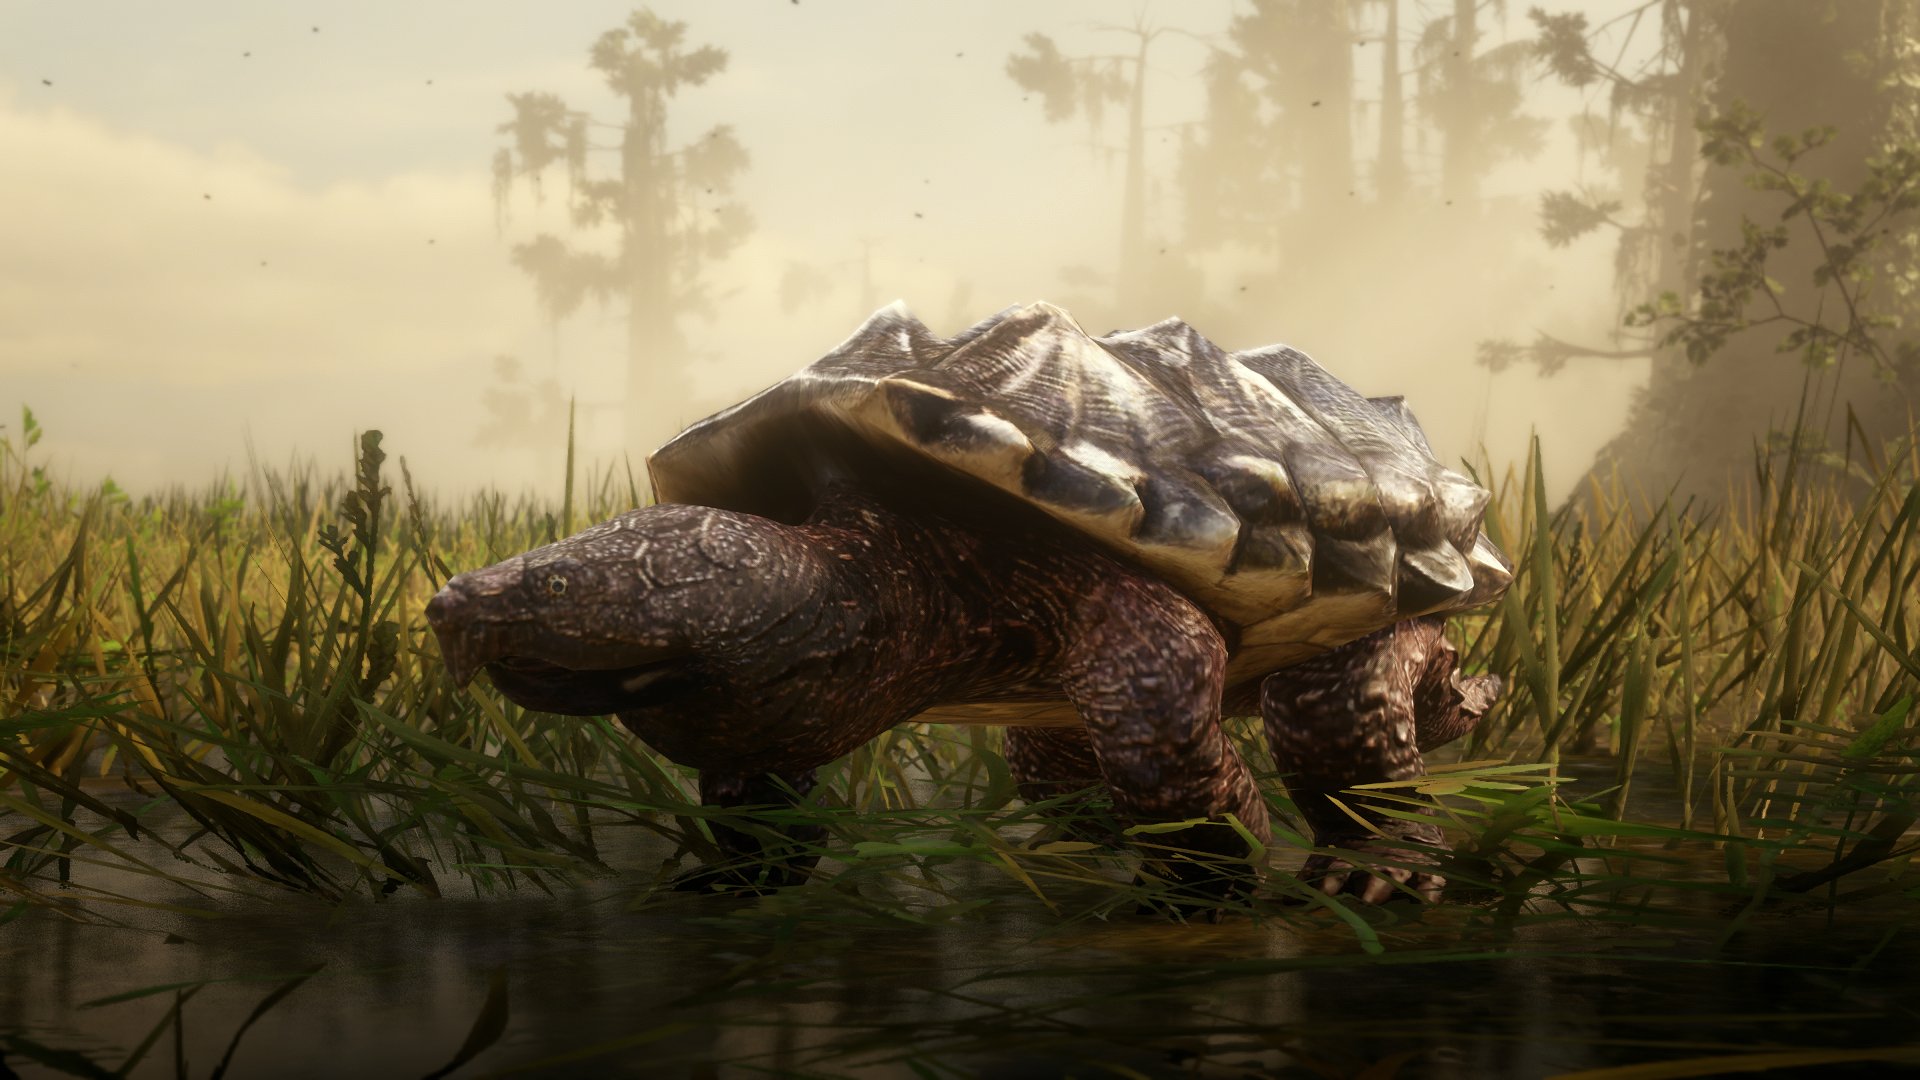 SLATZ_7 "Alligator Snapping Turtle #RDR2 #RockstarGames / Twitter